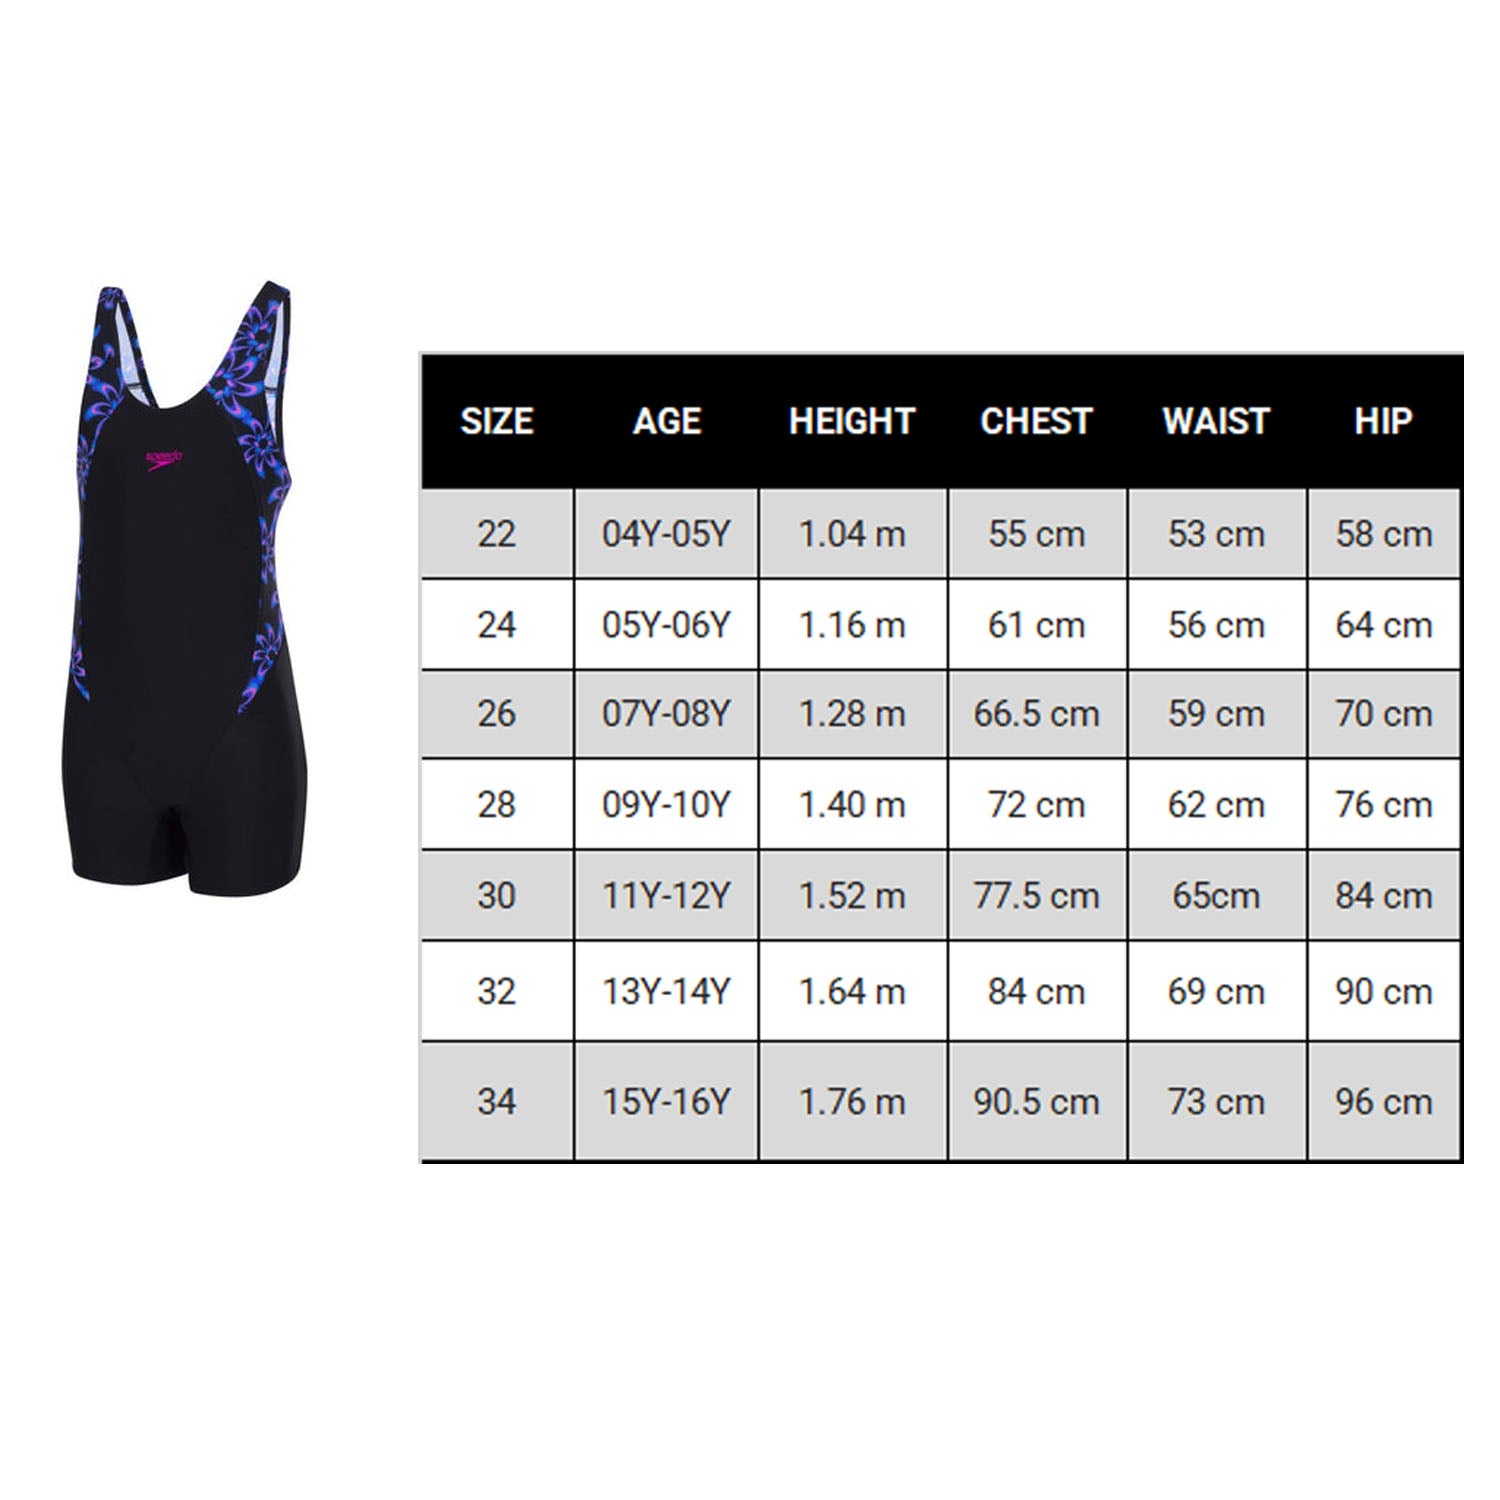 Speedo Girls Swimwear Boom Splice Legsuit (Electric Pink and Black) - Best Price online Prokicksports.com